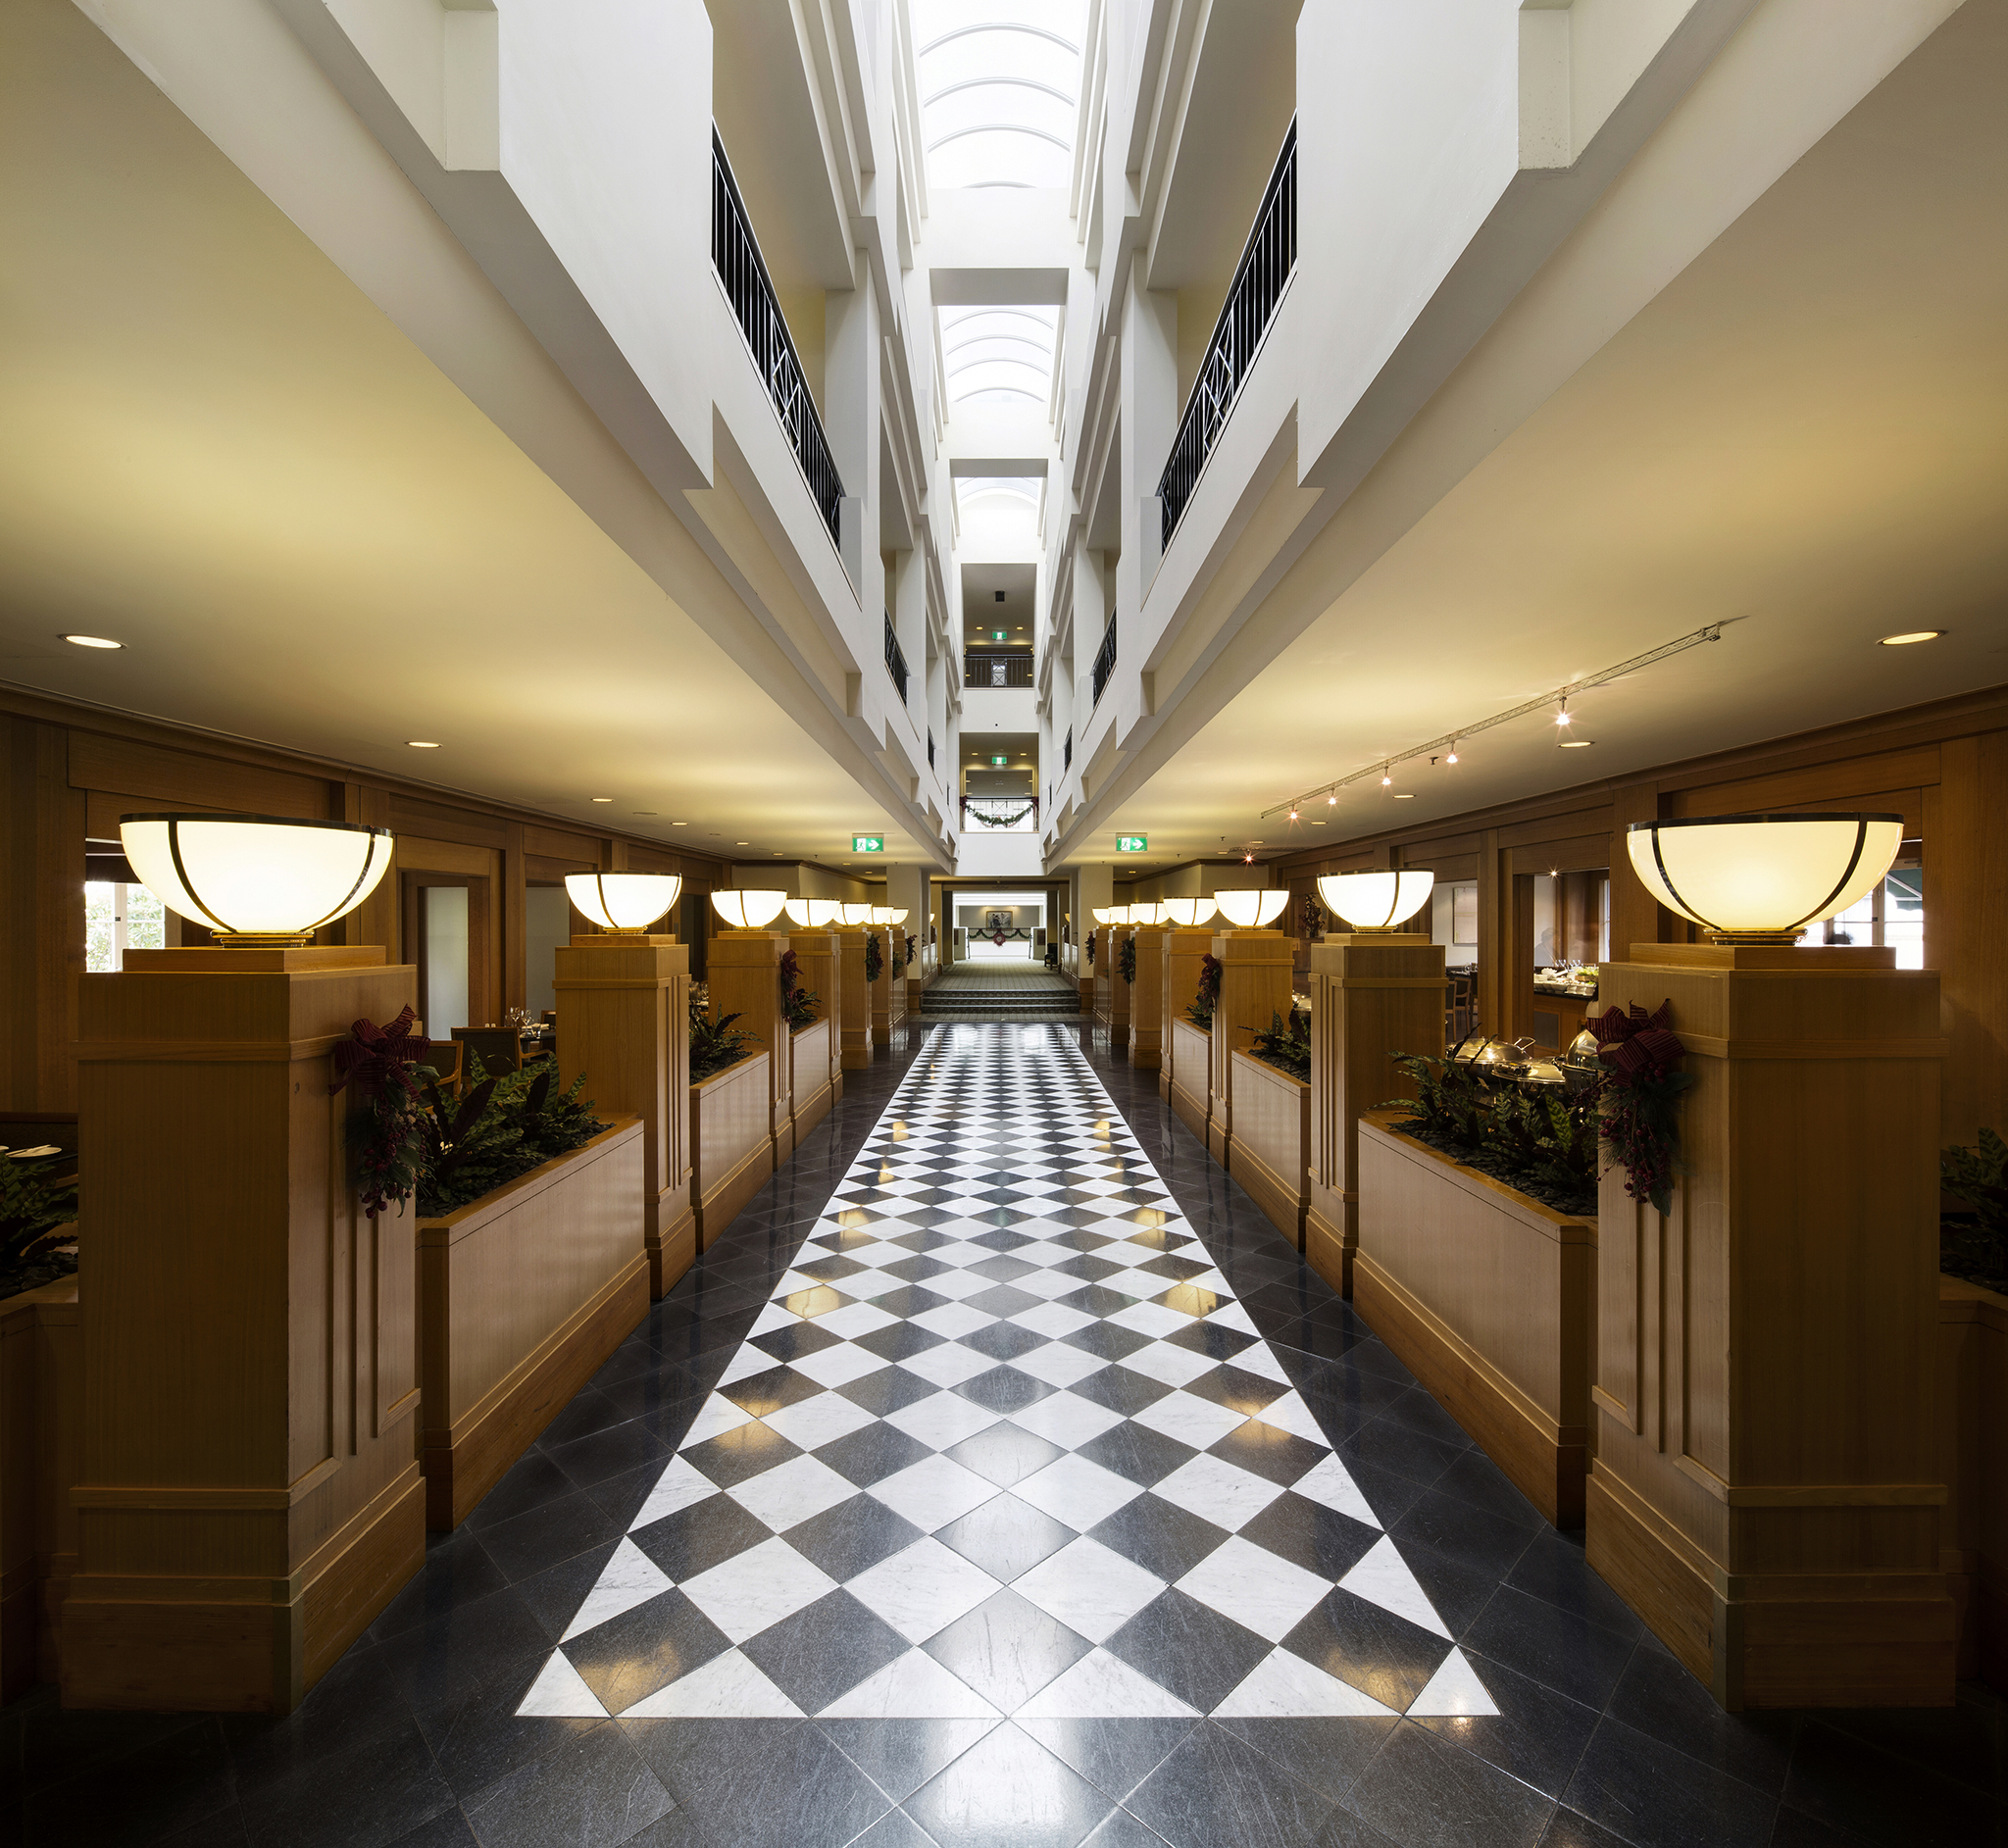 Hyatt Hotel Canberra luxury wedding venue and accommodation